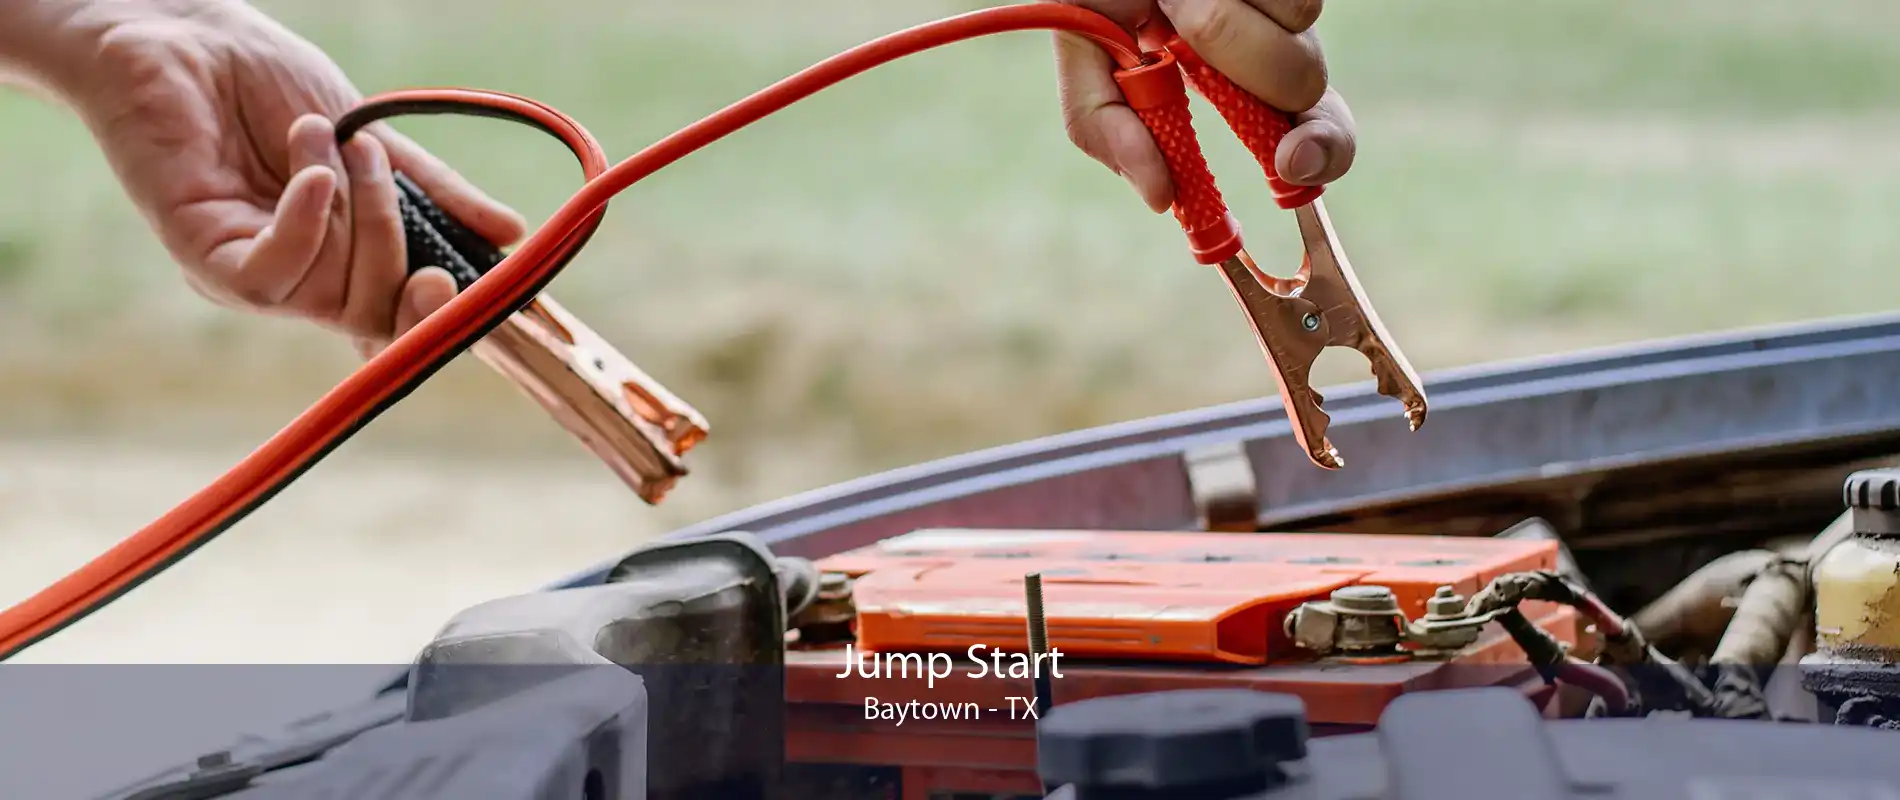 Jump Start Baytown - TX